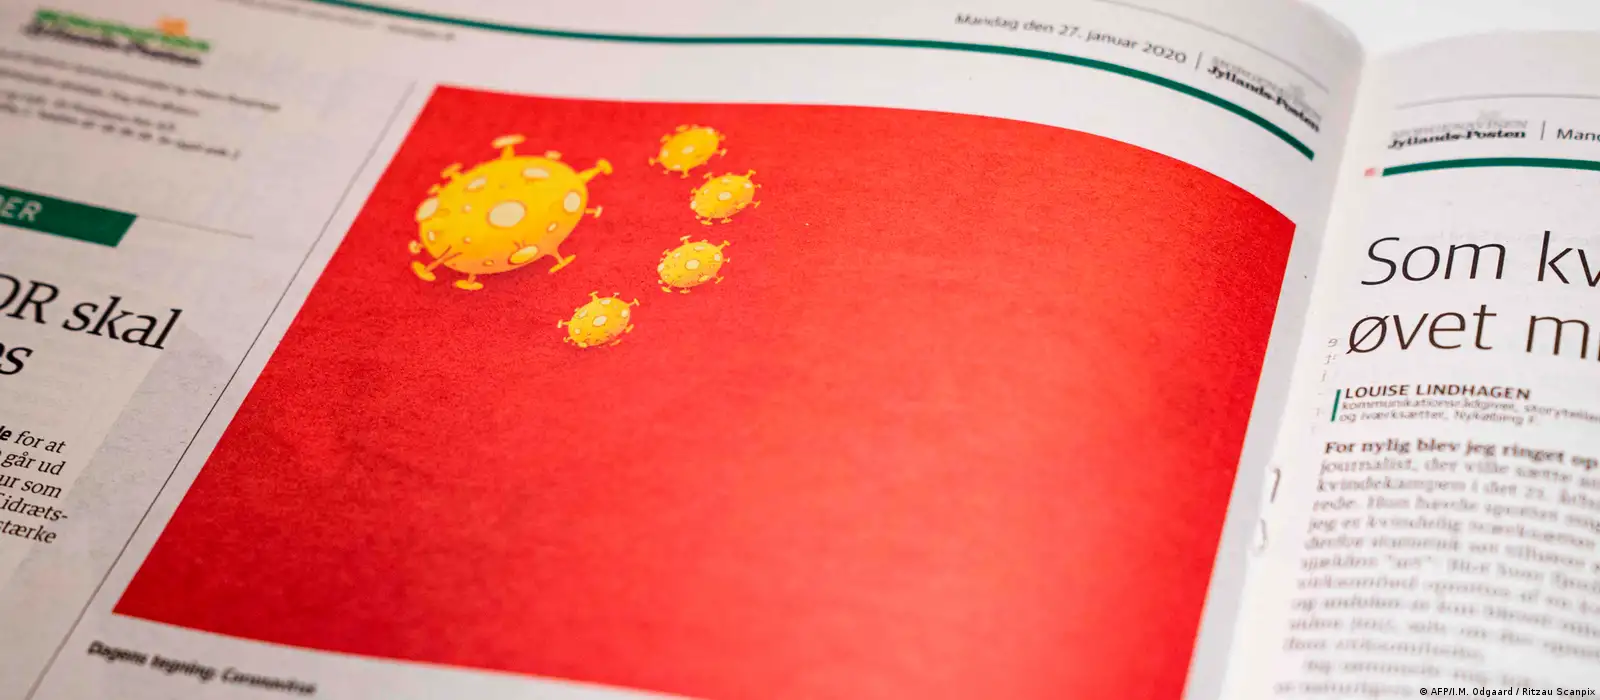 Danish coronavirus cartoon unfurls controversy in China – DW – 01/30/2020